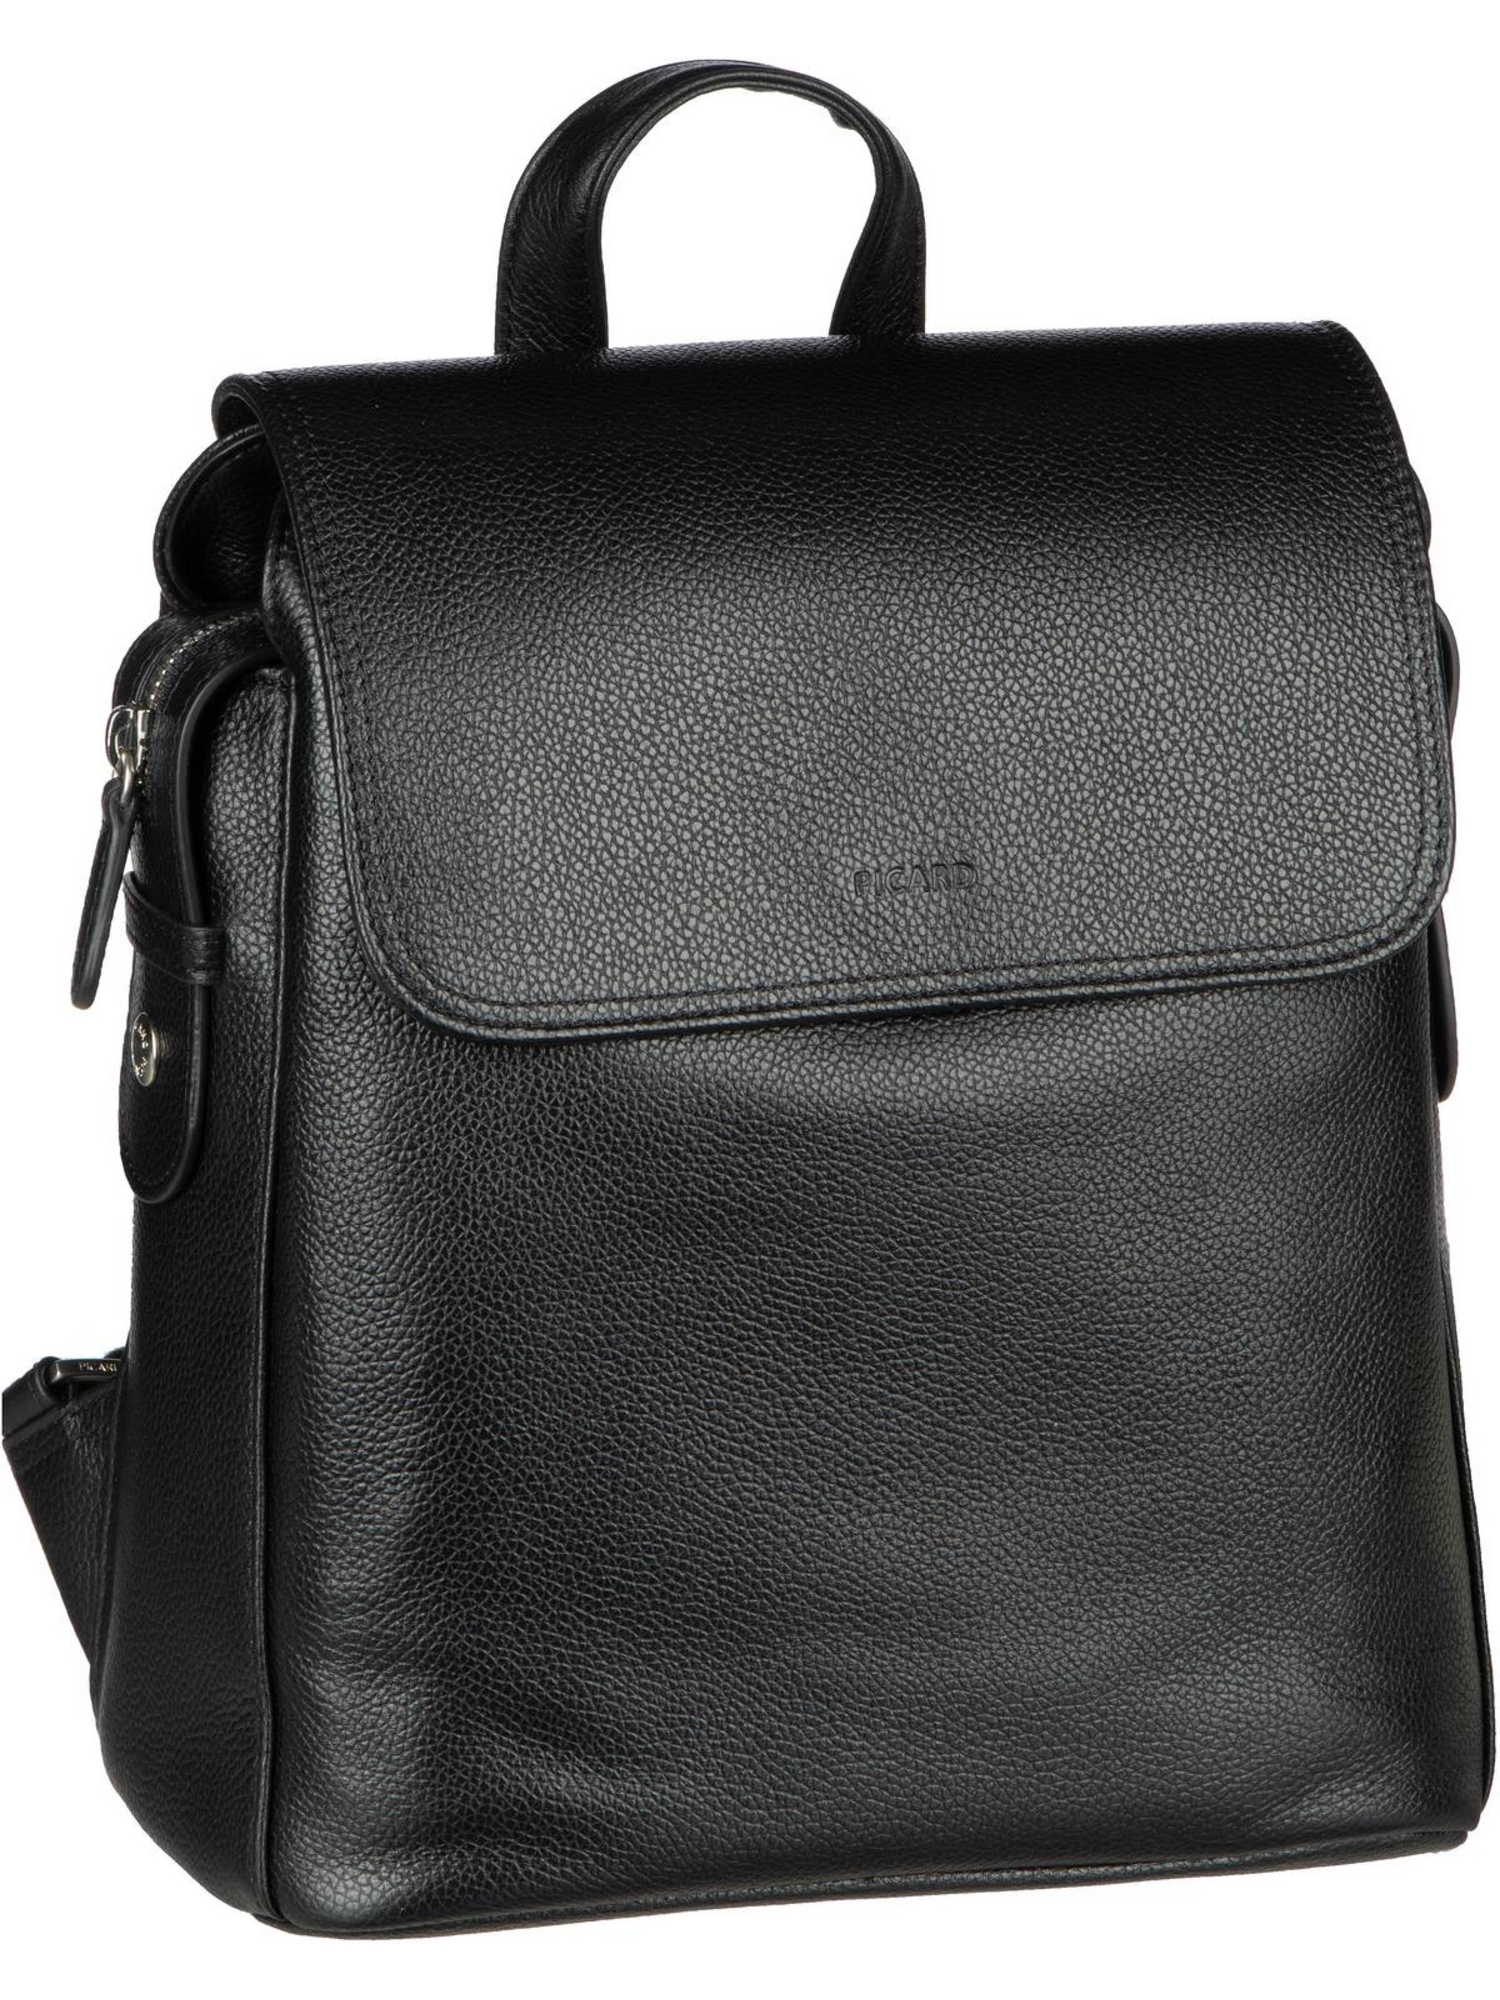 Рюкзак PICARD/Backpack Luis 7853, черный